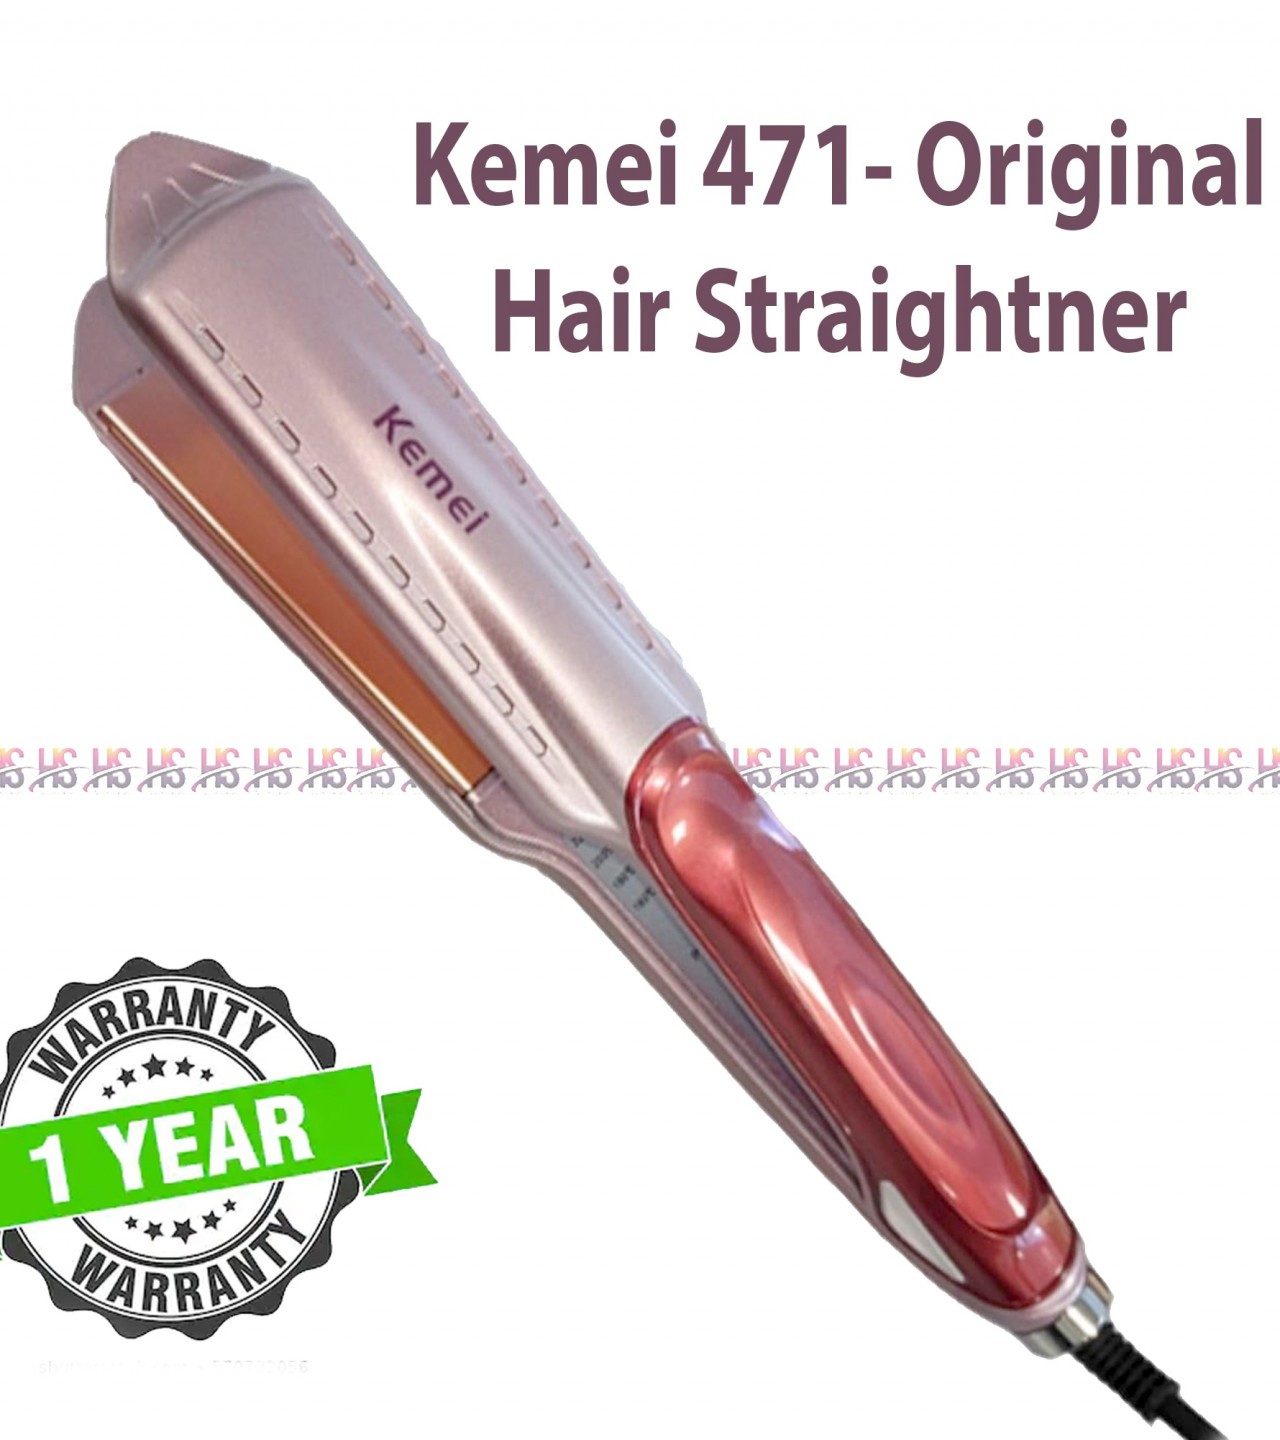 Kemei 471 Professional Hair Straightener Original - 1 year Brand Warranty